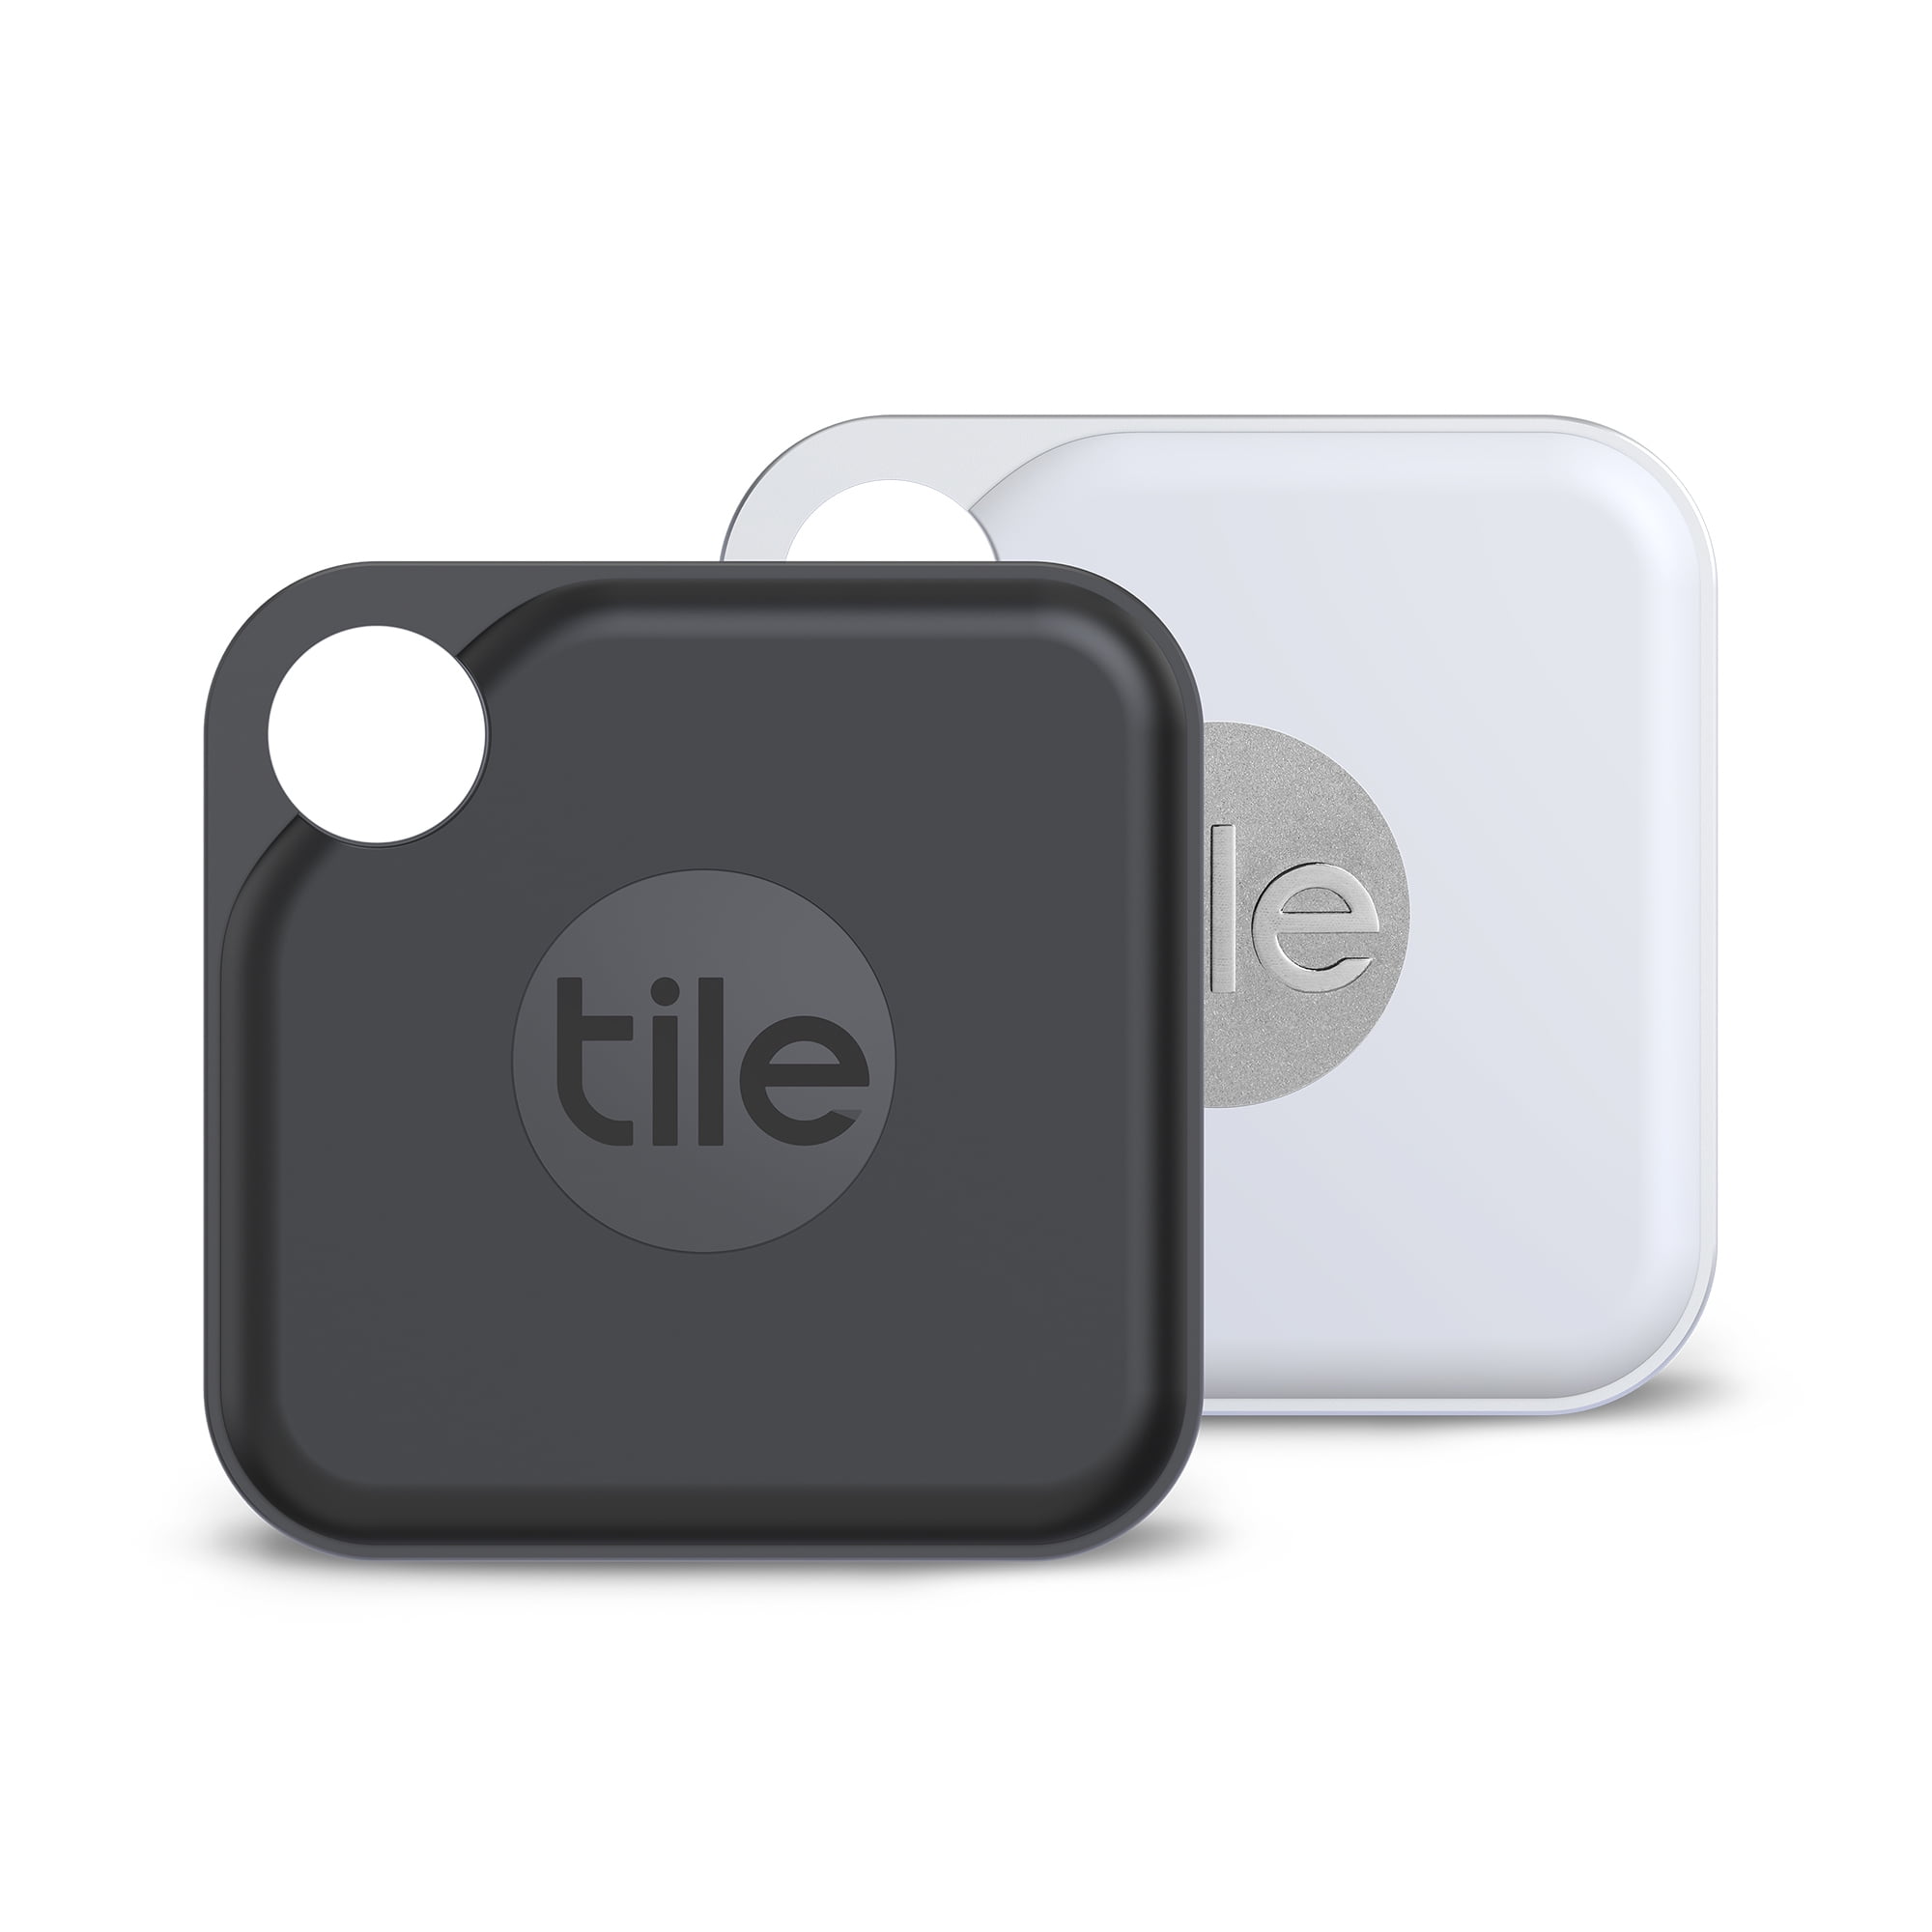 Tile RE-25002 Sticker (2020) Bluetooth Tracker (Pack of 2) - Black